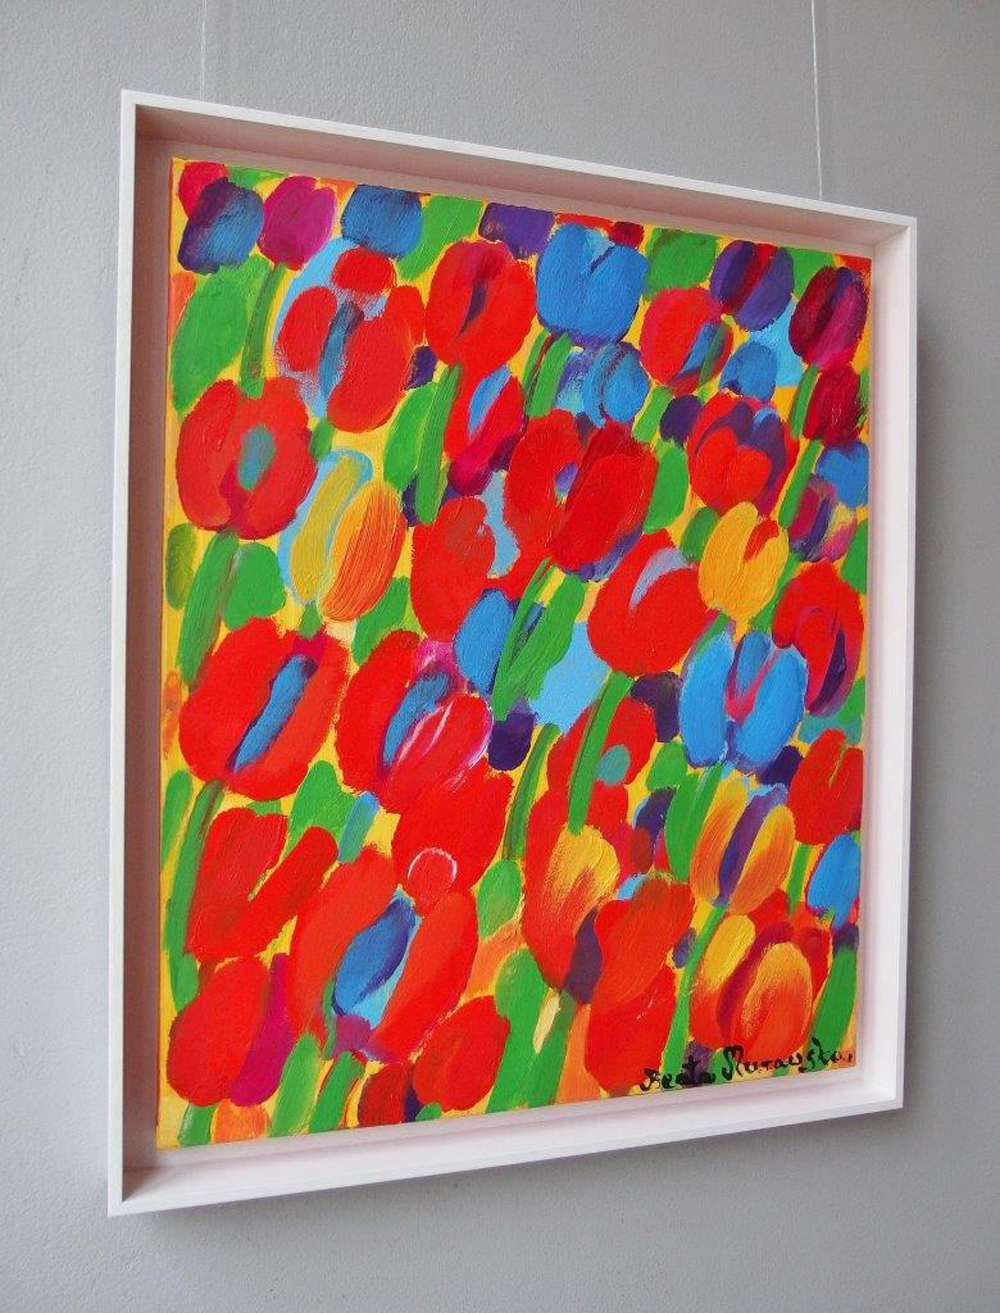 Beata Murawska - Red desire (Oil on Canvas | Wymiary: 56 x 66 cm | Cena: 3500 PLN)